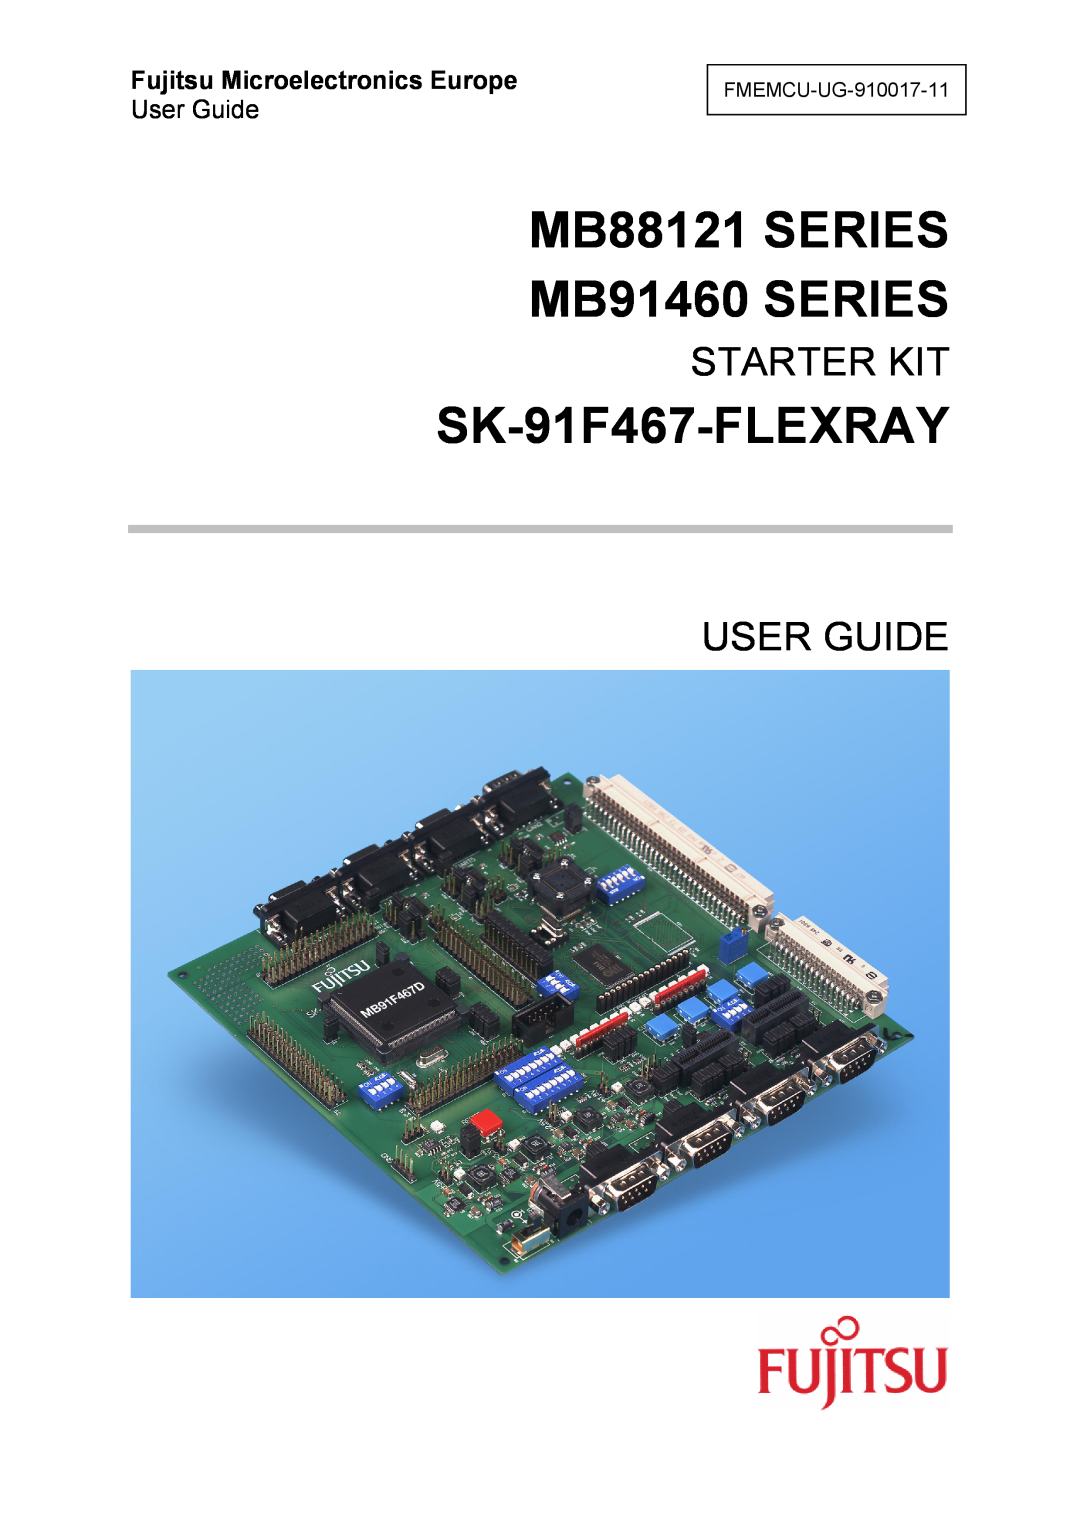 Fujitsu manual MB88121 SERIES MB91460 SERIES, SK-91F467-FLEXRAY, Starter Kit, User Guide 